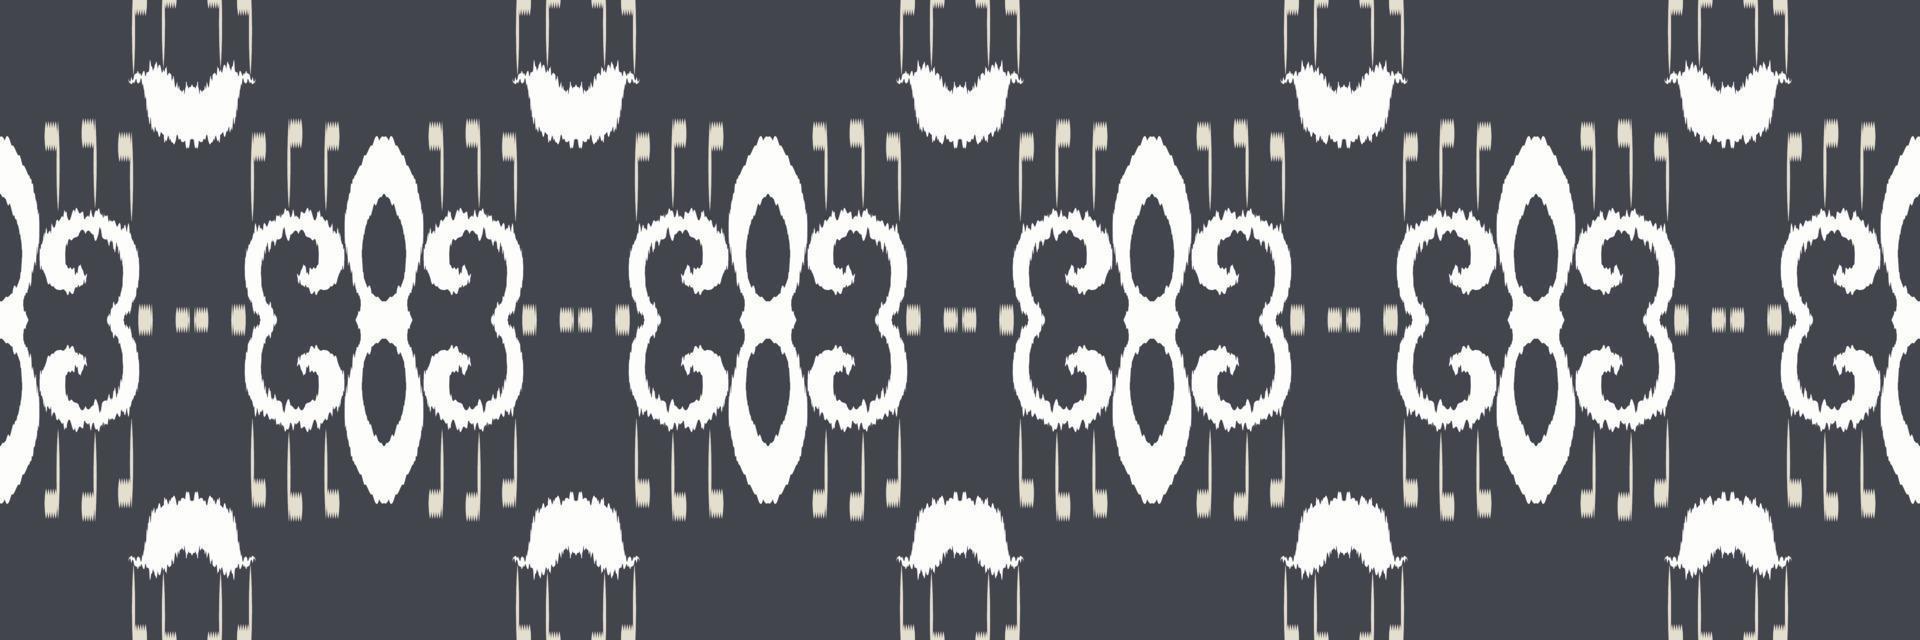 Batik Textile Ikkat or ikat texture seamless pattern digital vector design for Print saree Kurti Borneo Fabric border brush symbols swatches cotton